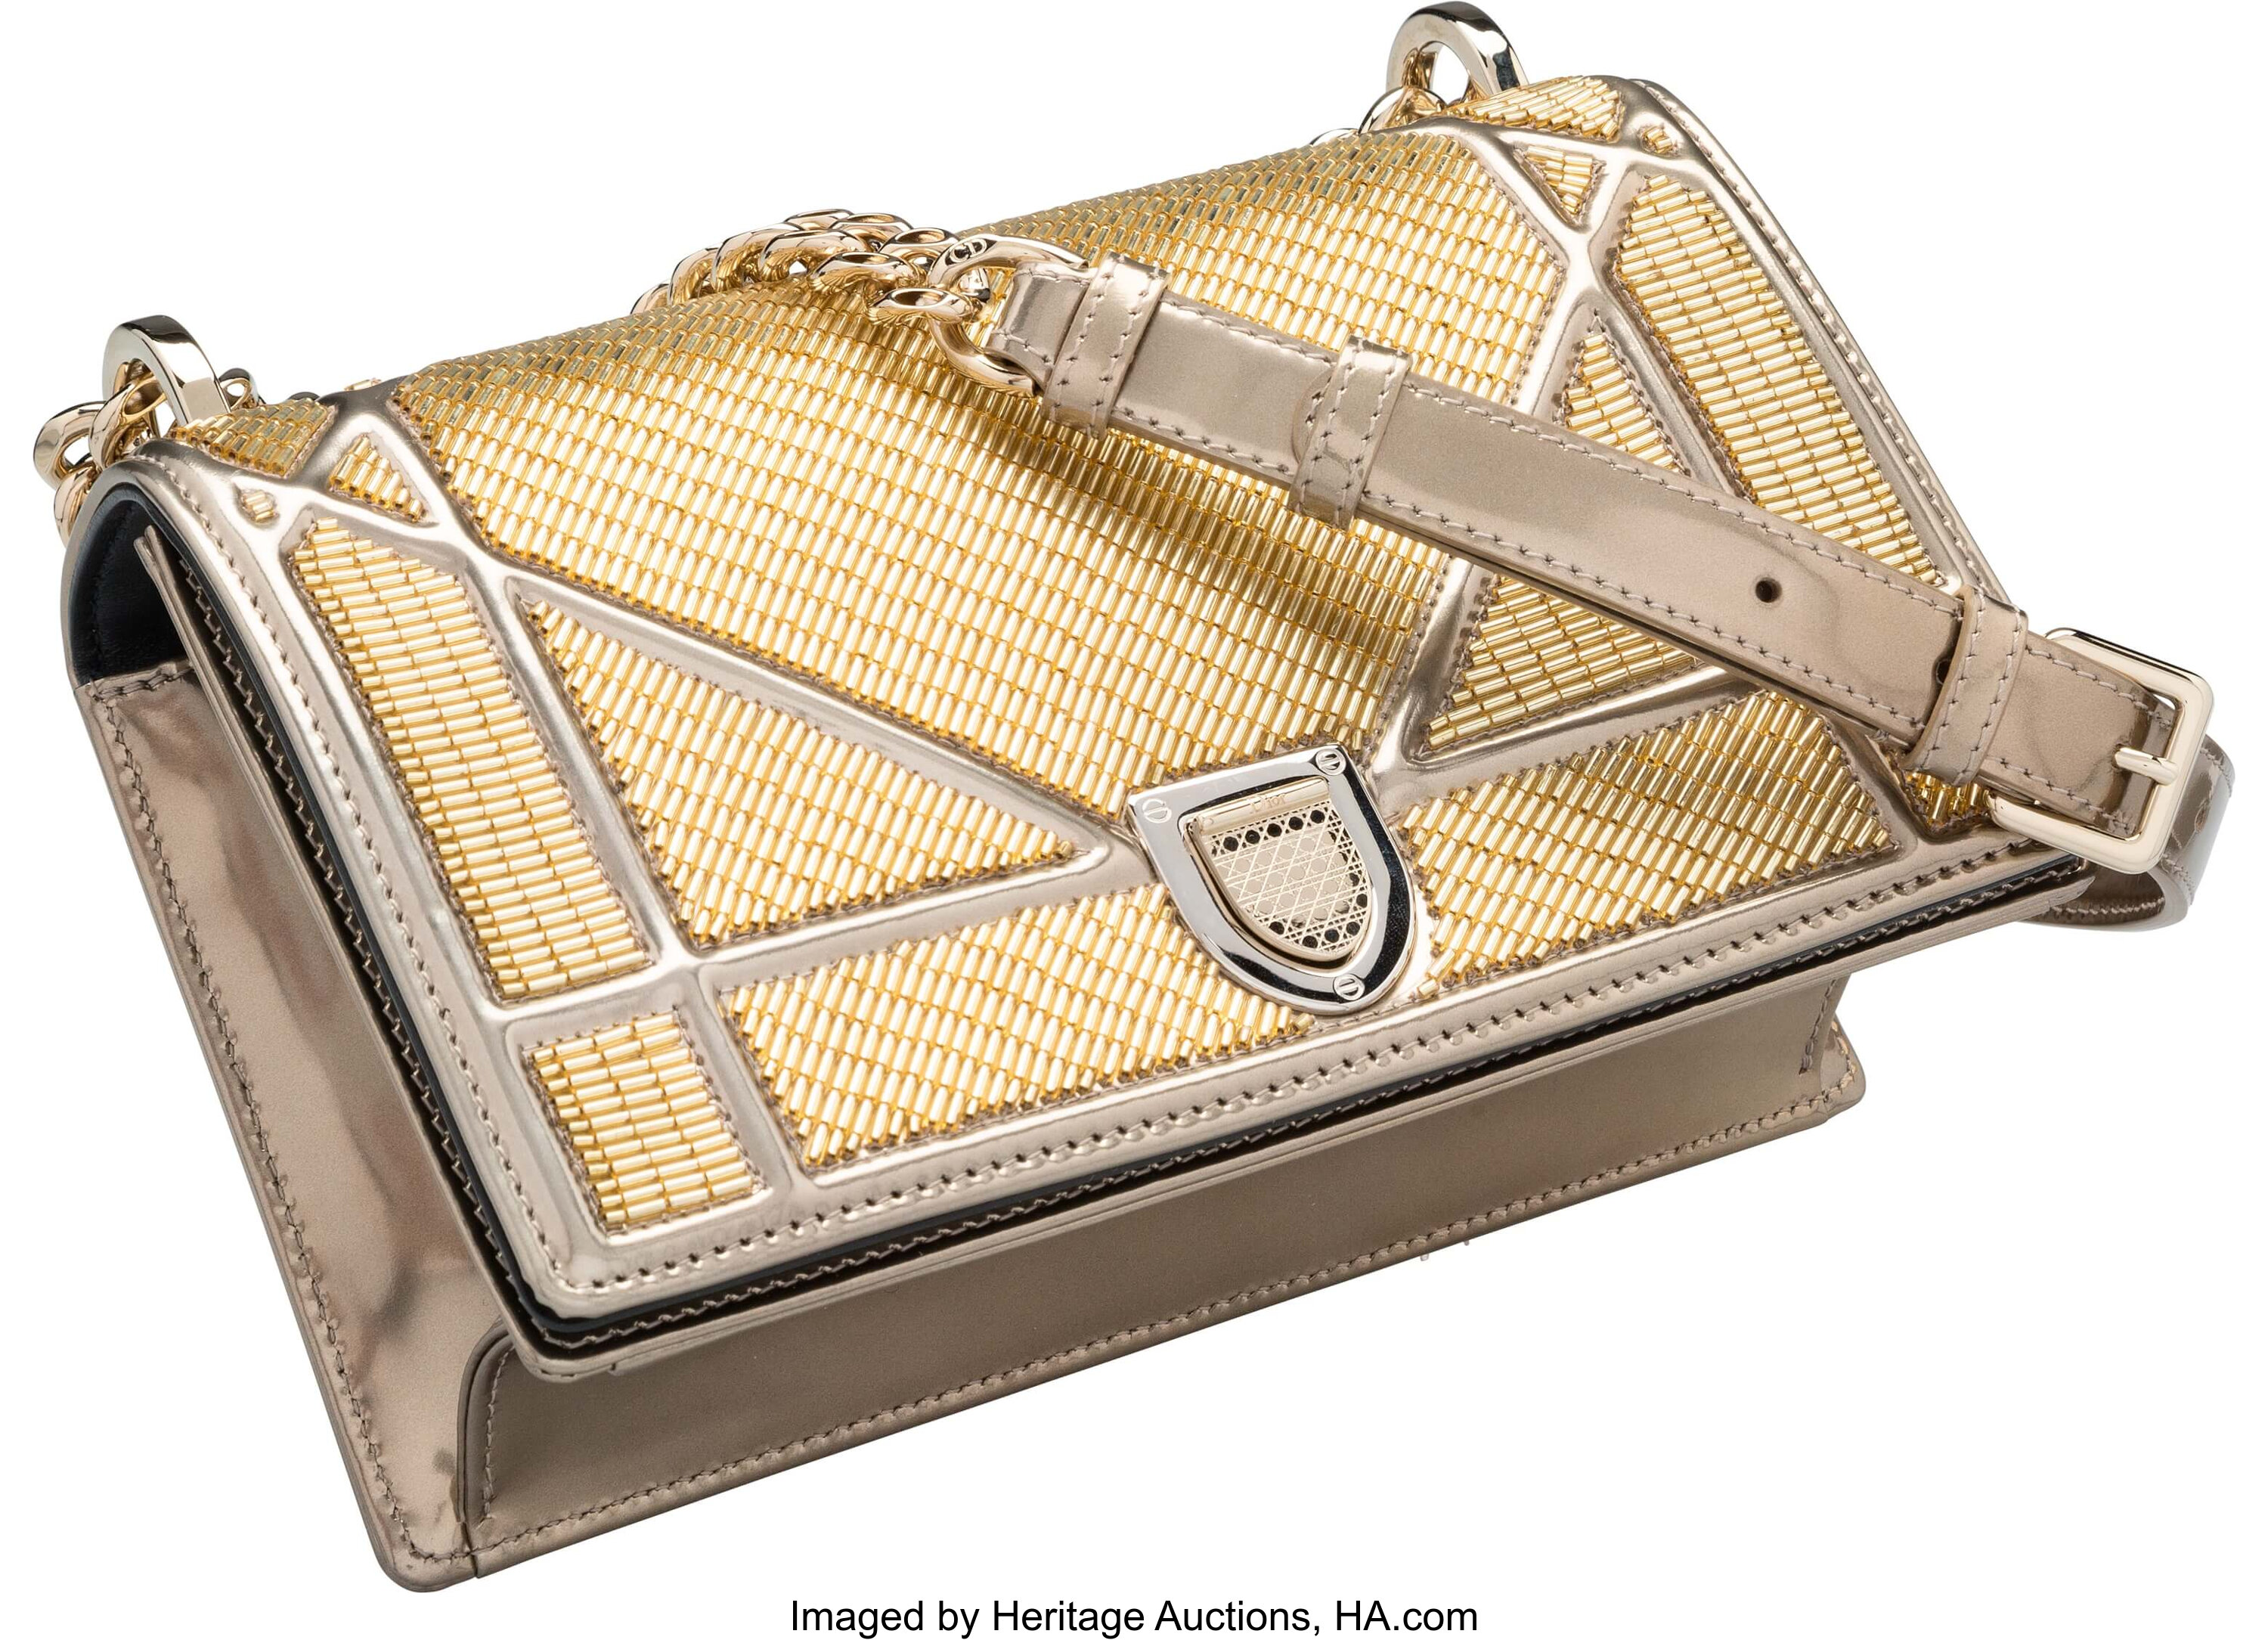 DIOR Diorama Patent Leather Clutch, Metallic Gold, Cannage Pattern